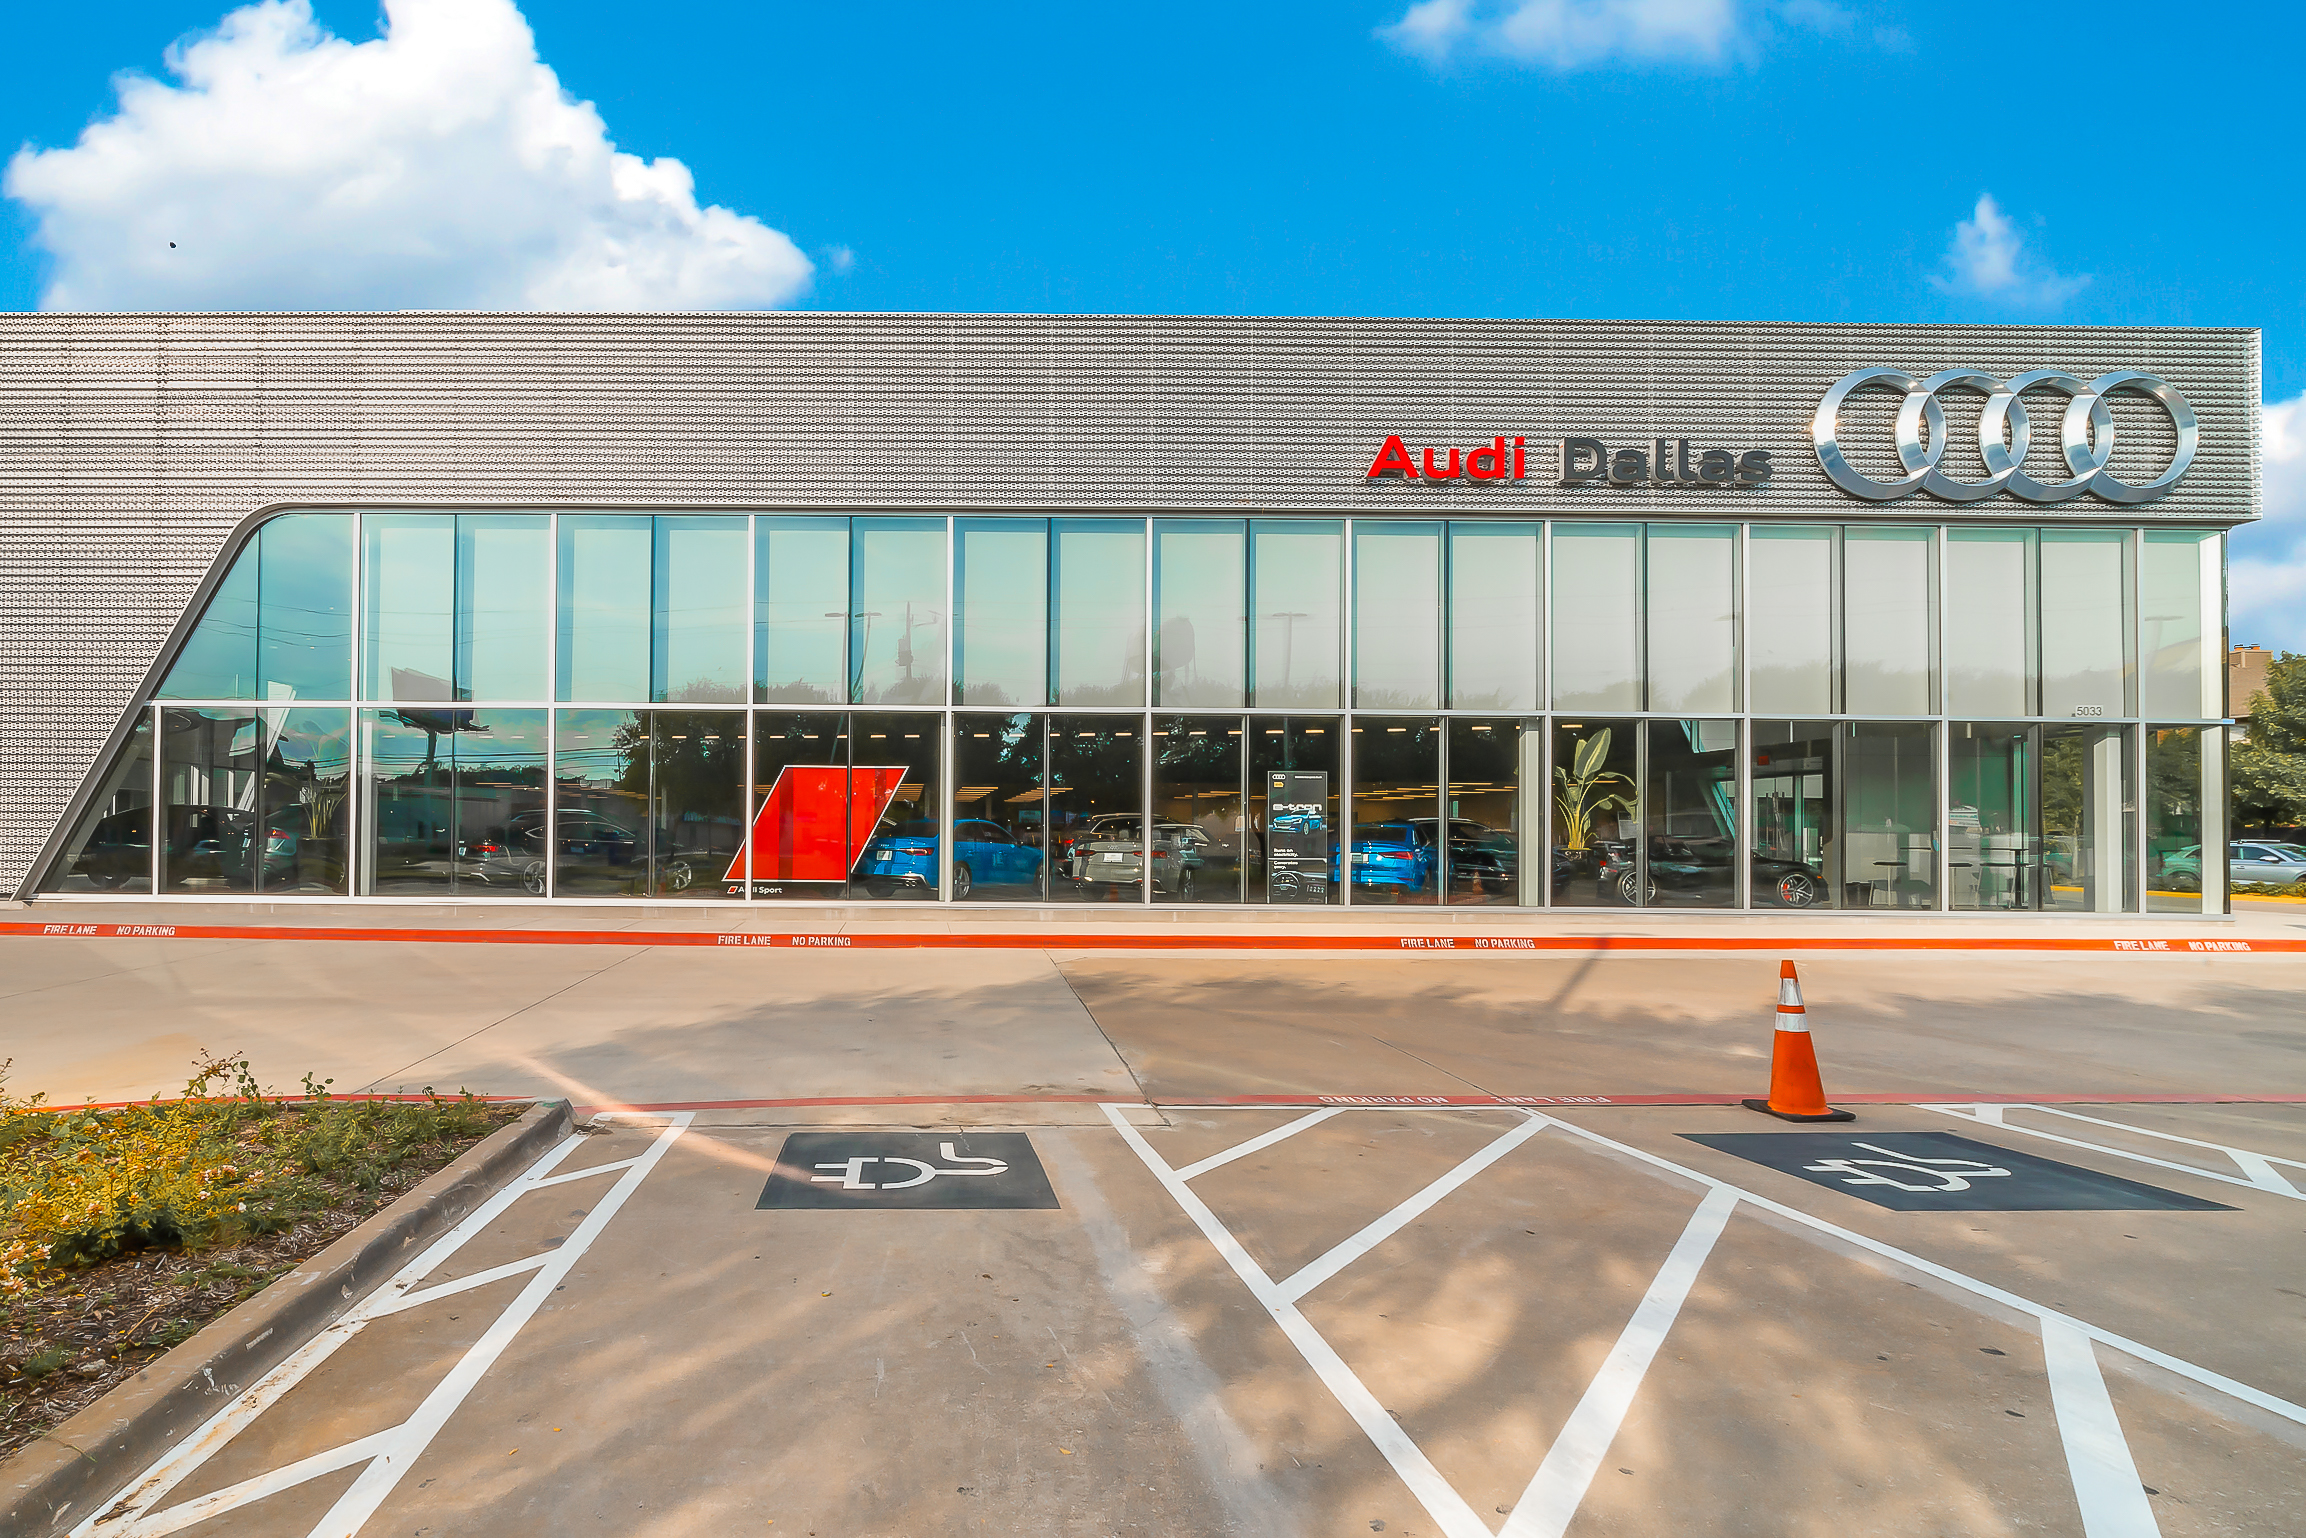  Audi of America | Audi Dallas Car Dealership category